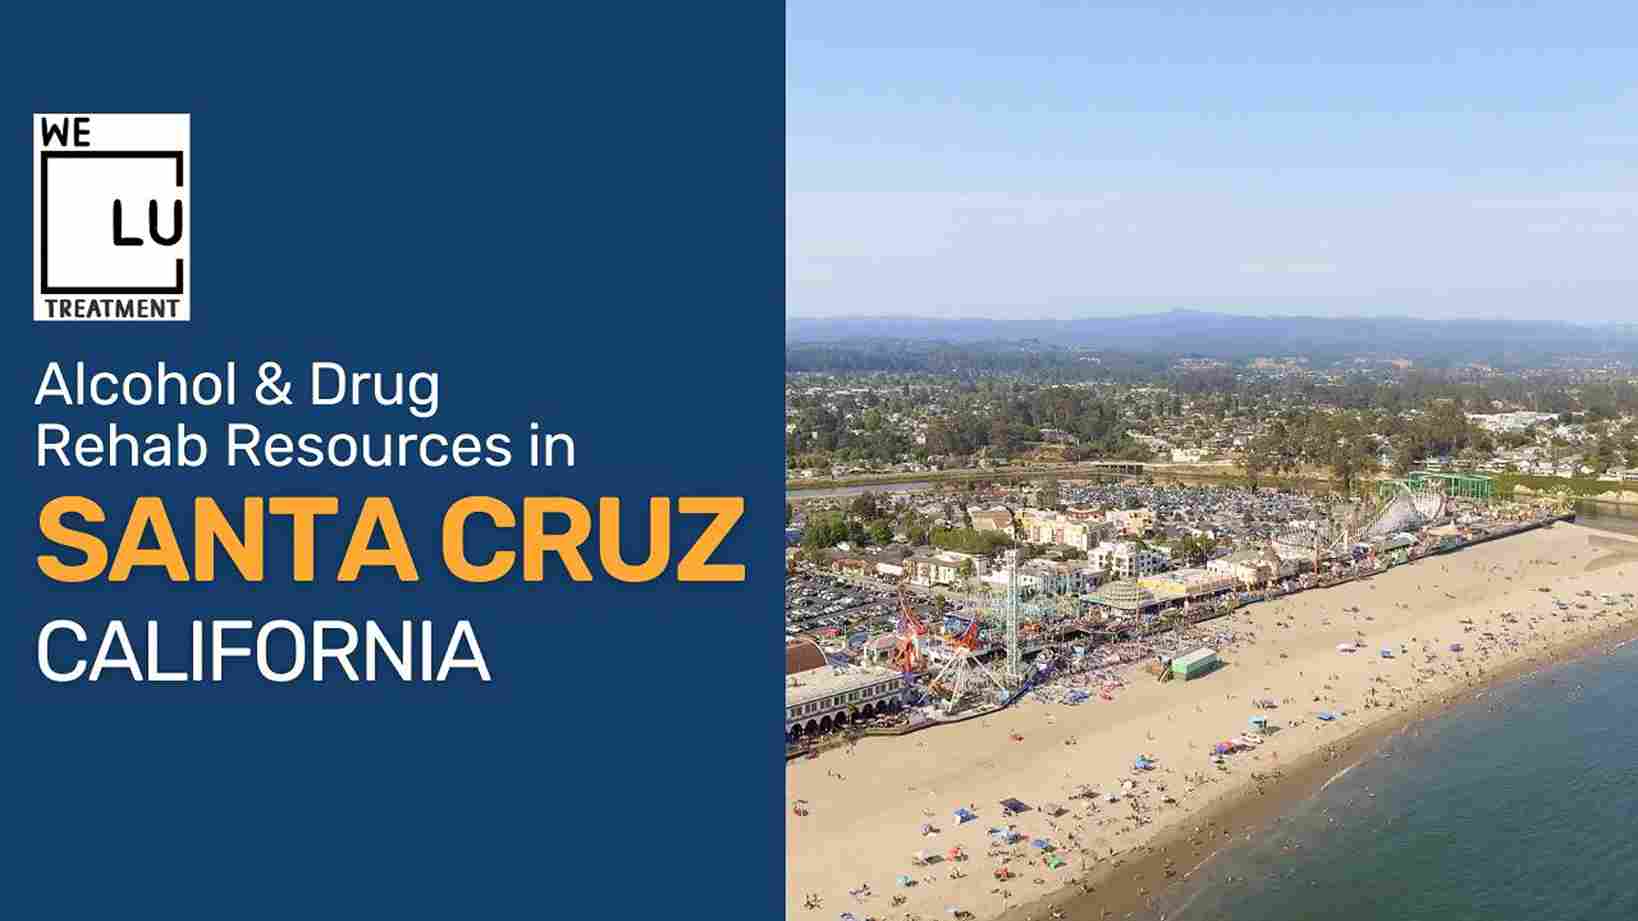 Santa Cruz CA We Level Up treatment center for drug and alcohol rehab detox and mental health services - Image 1